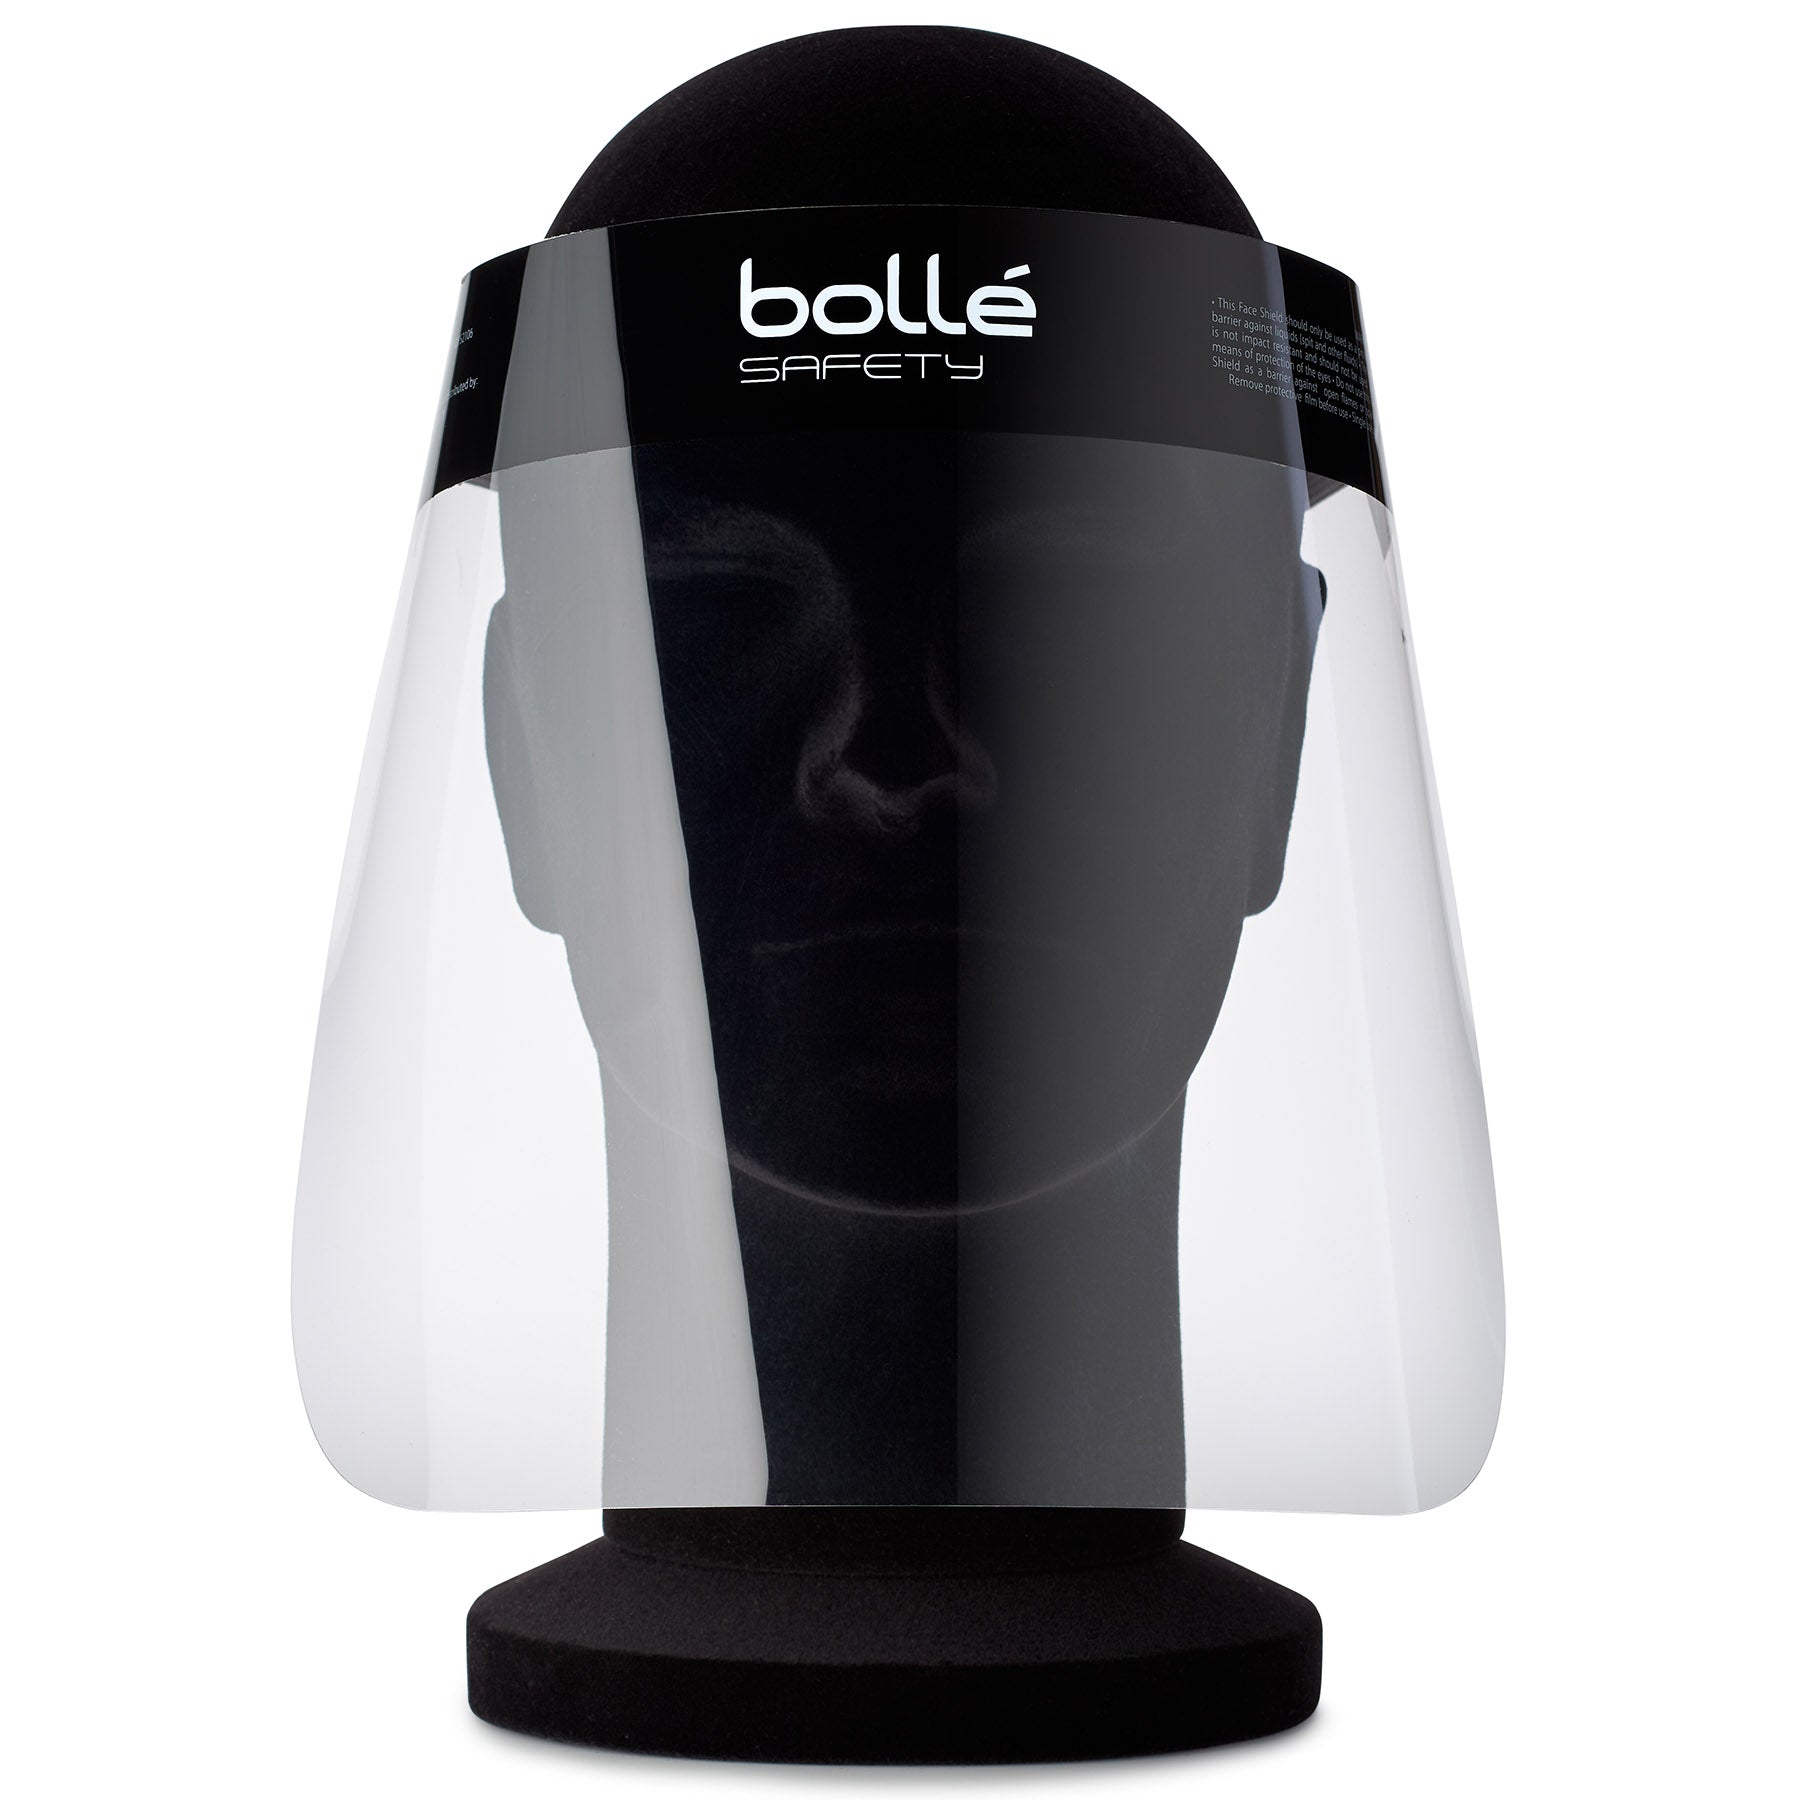 Bolle DFS1 Face Shield - Anti-fog Anti splashes & droplets